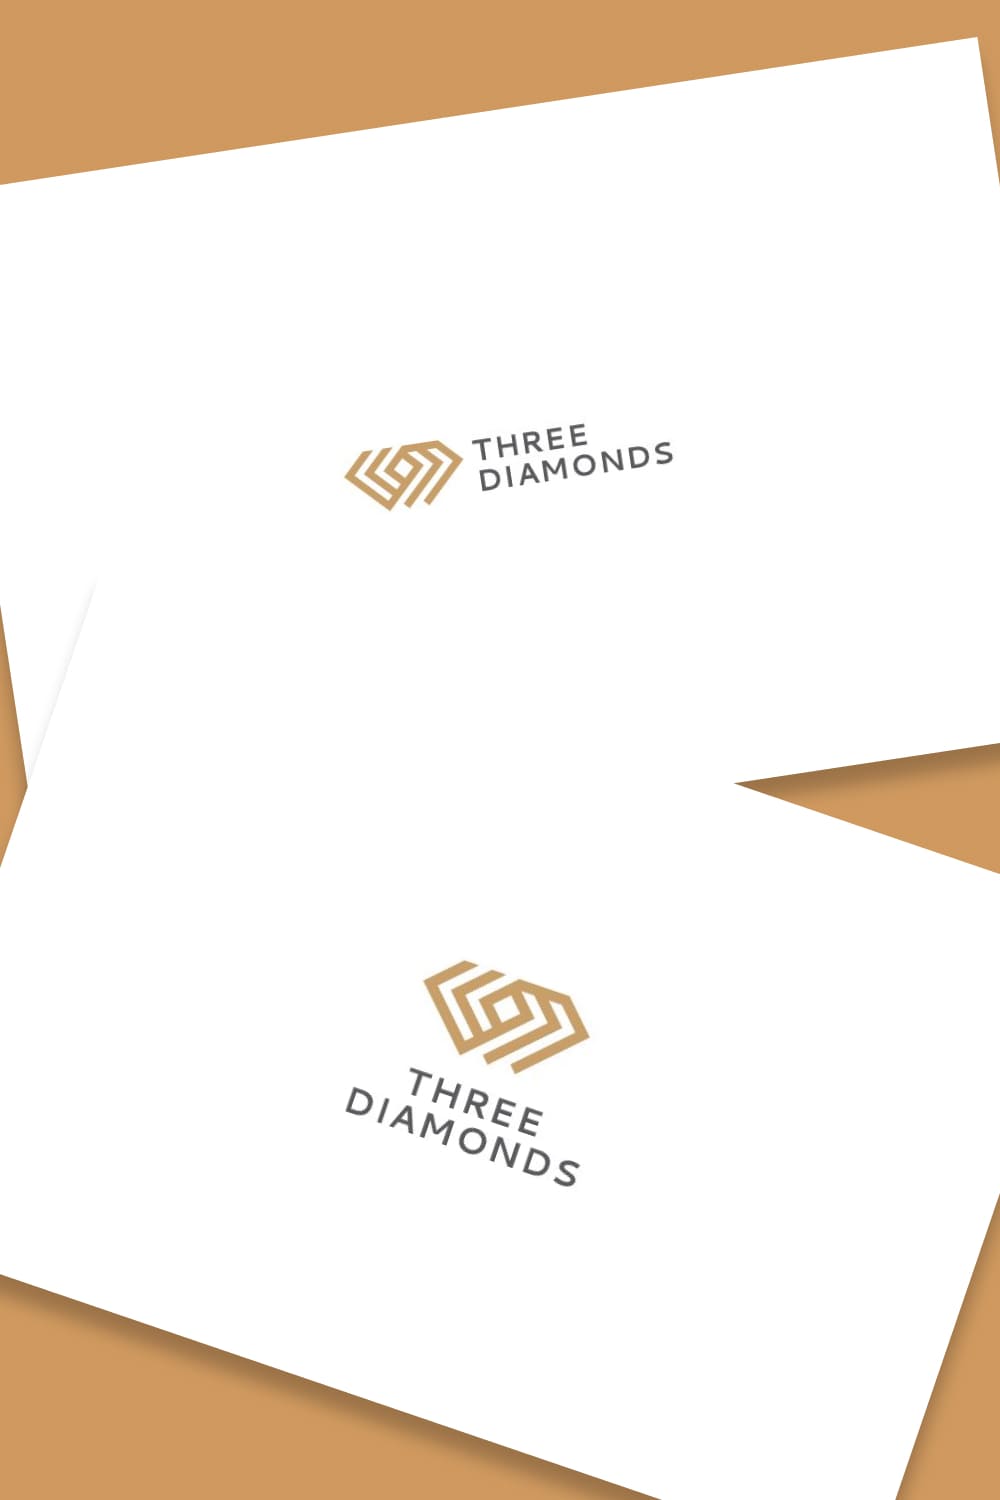 three diamond jewelry logo for elegant brand.